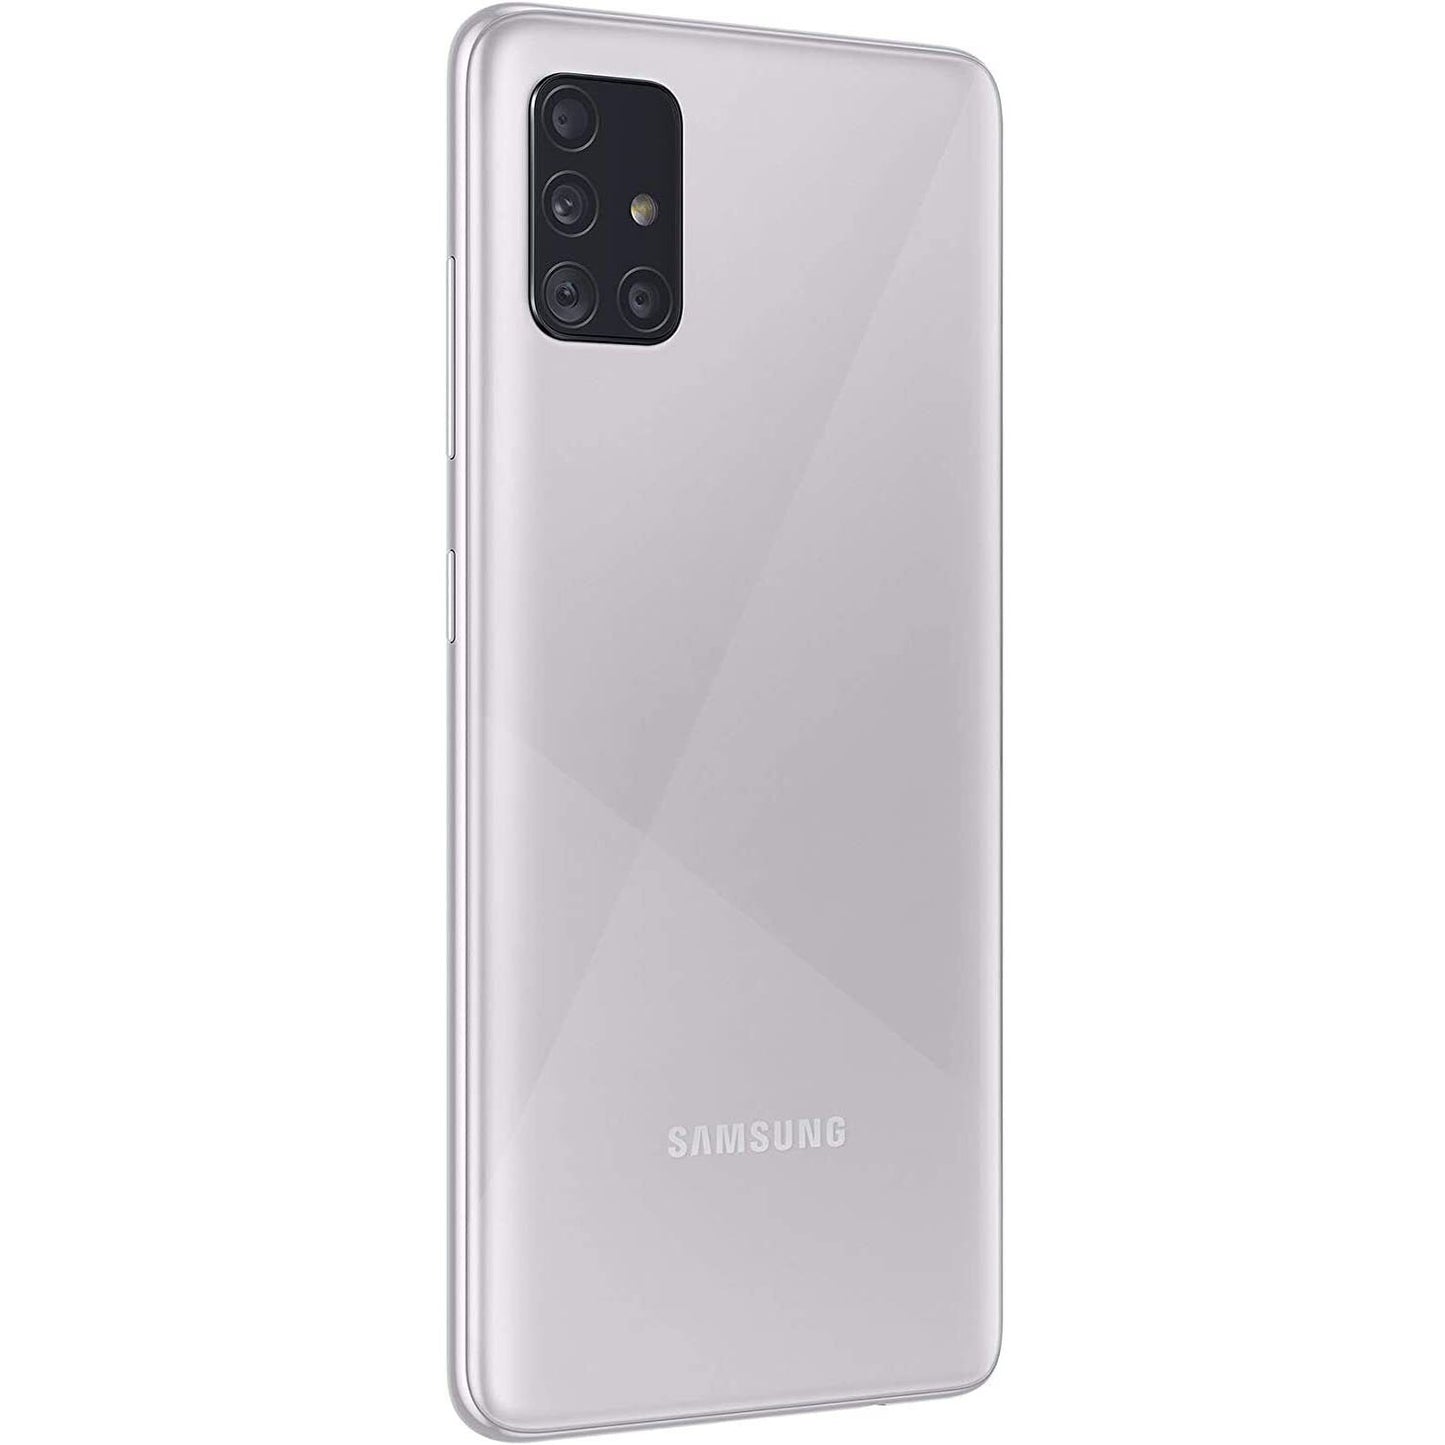 Samsung Galaxy A51 Unlocked 128GB Dual-SIM 6.5" LTE Android Smartphone Silver SM-A515F